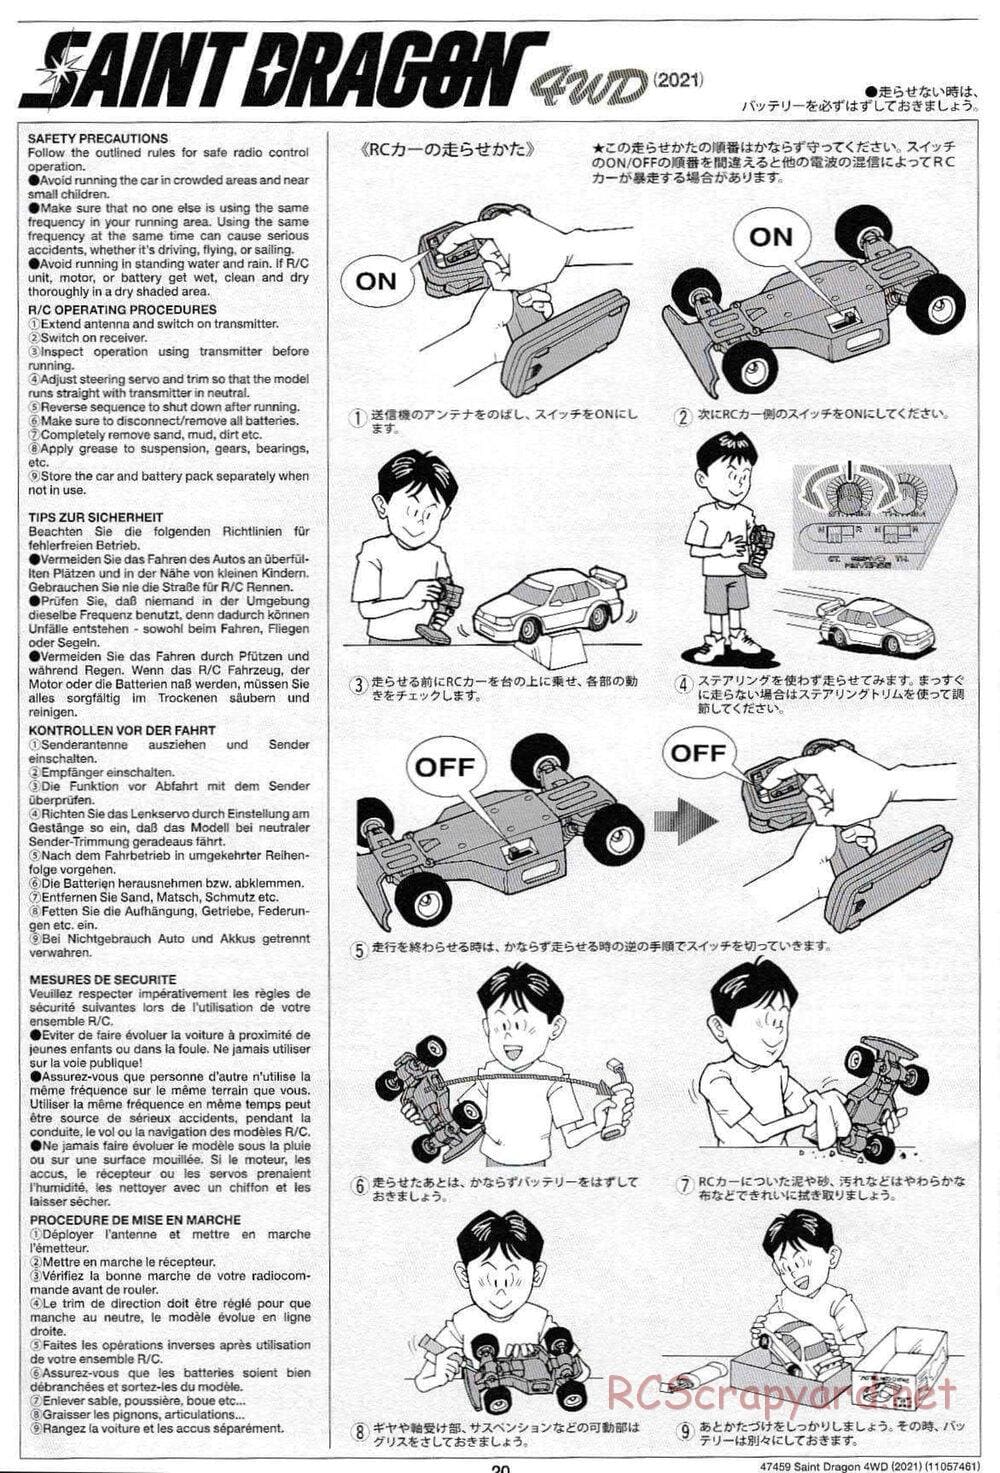 Tamiya - Saint Dragon (2021) Chassis - Manual - Page 20